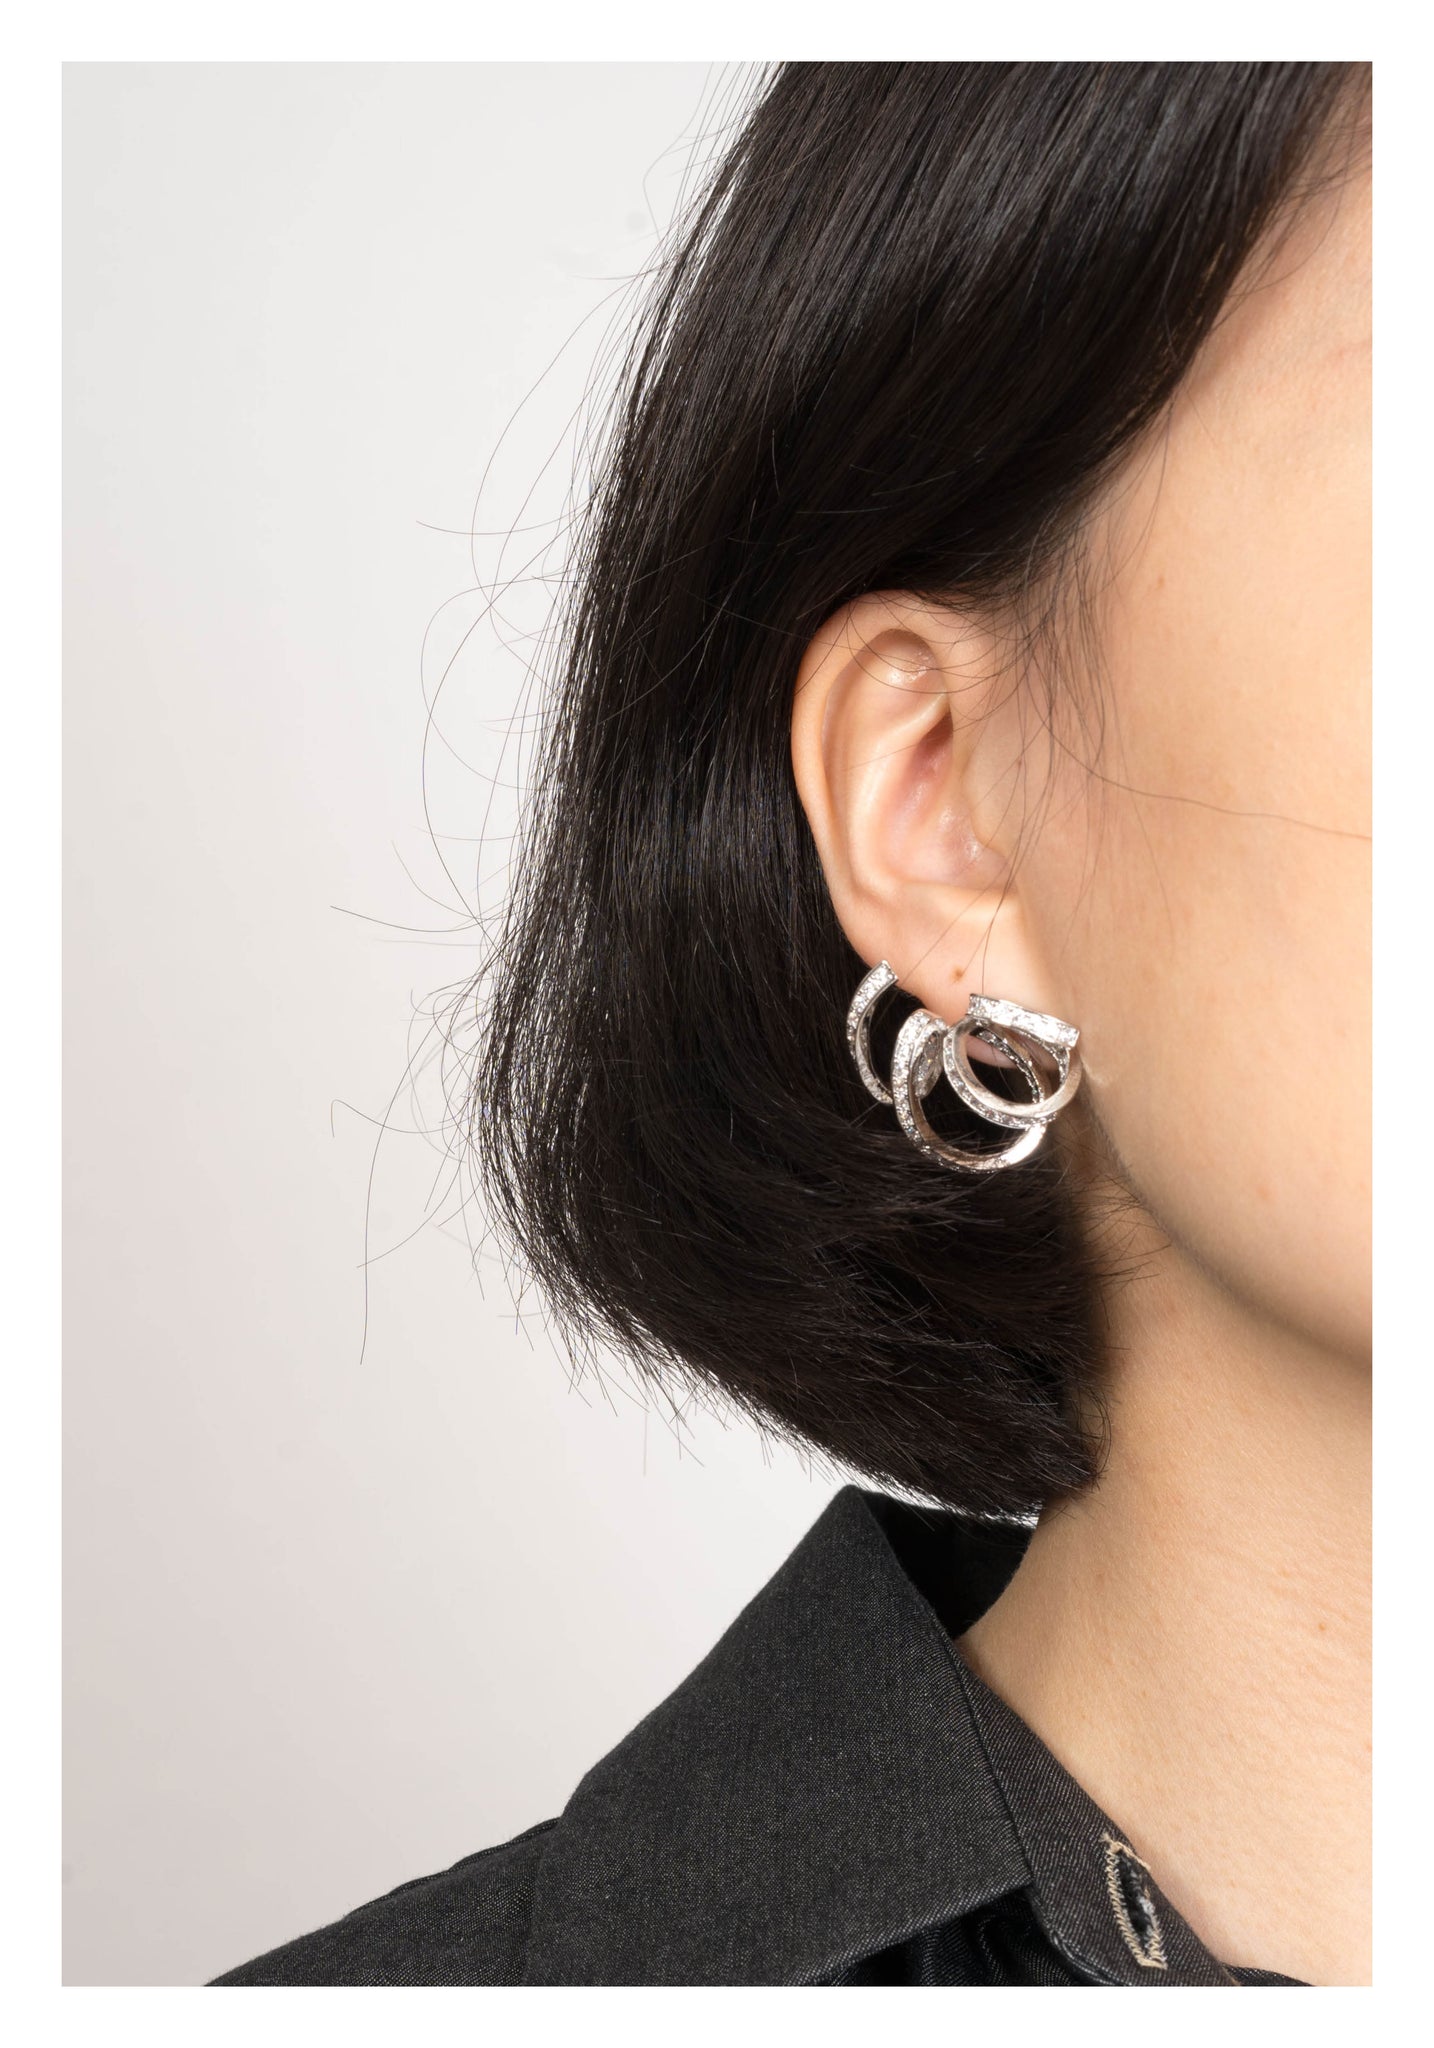 Sparkle Spiral Surrounding Earrings - whoami